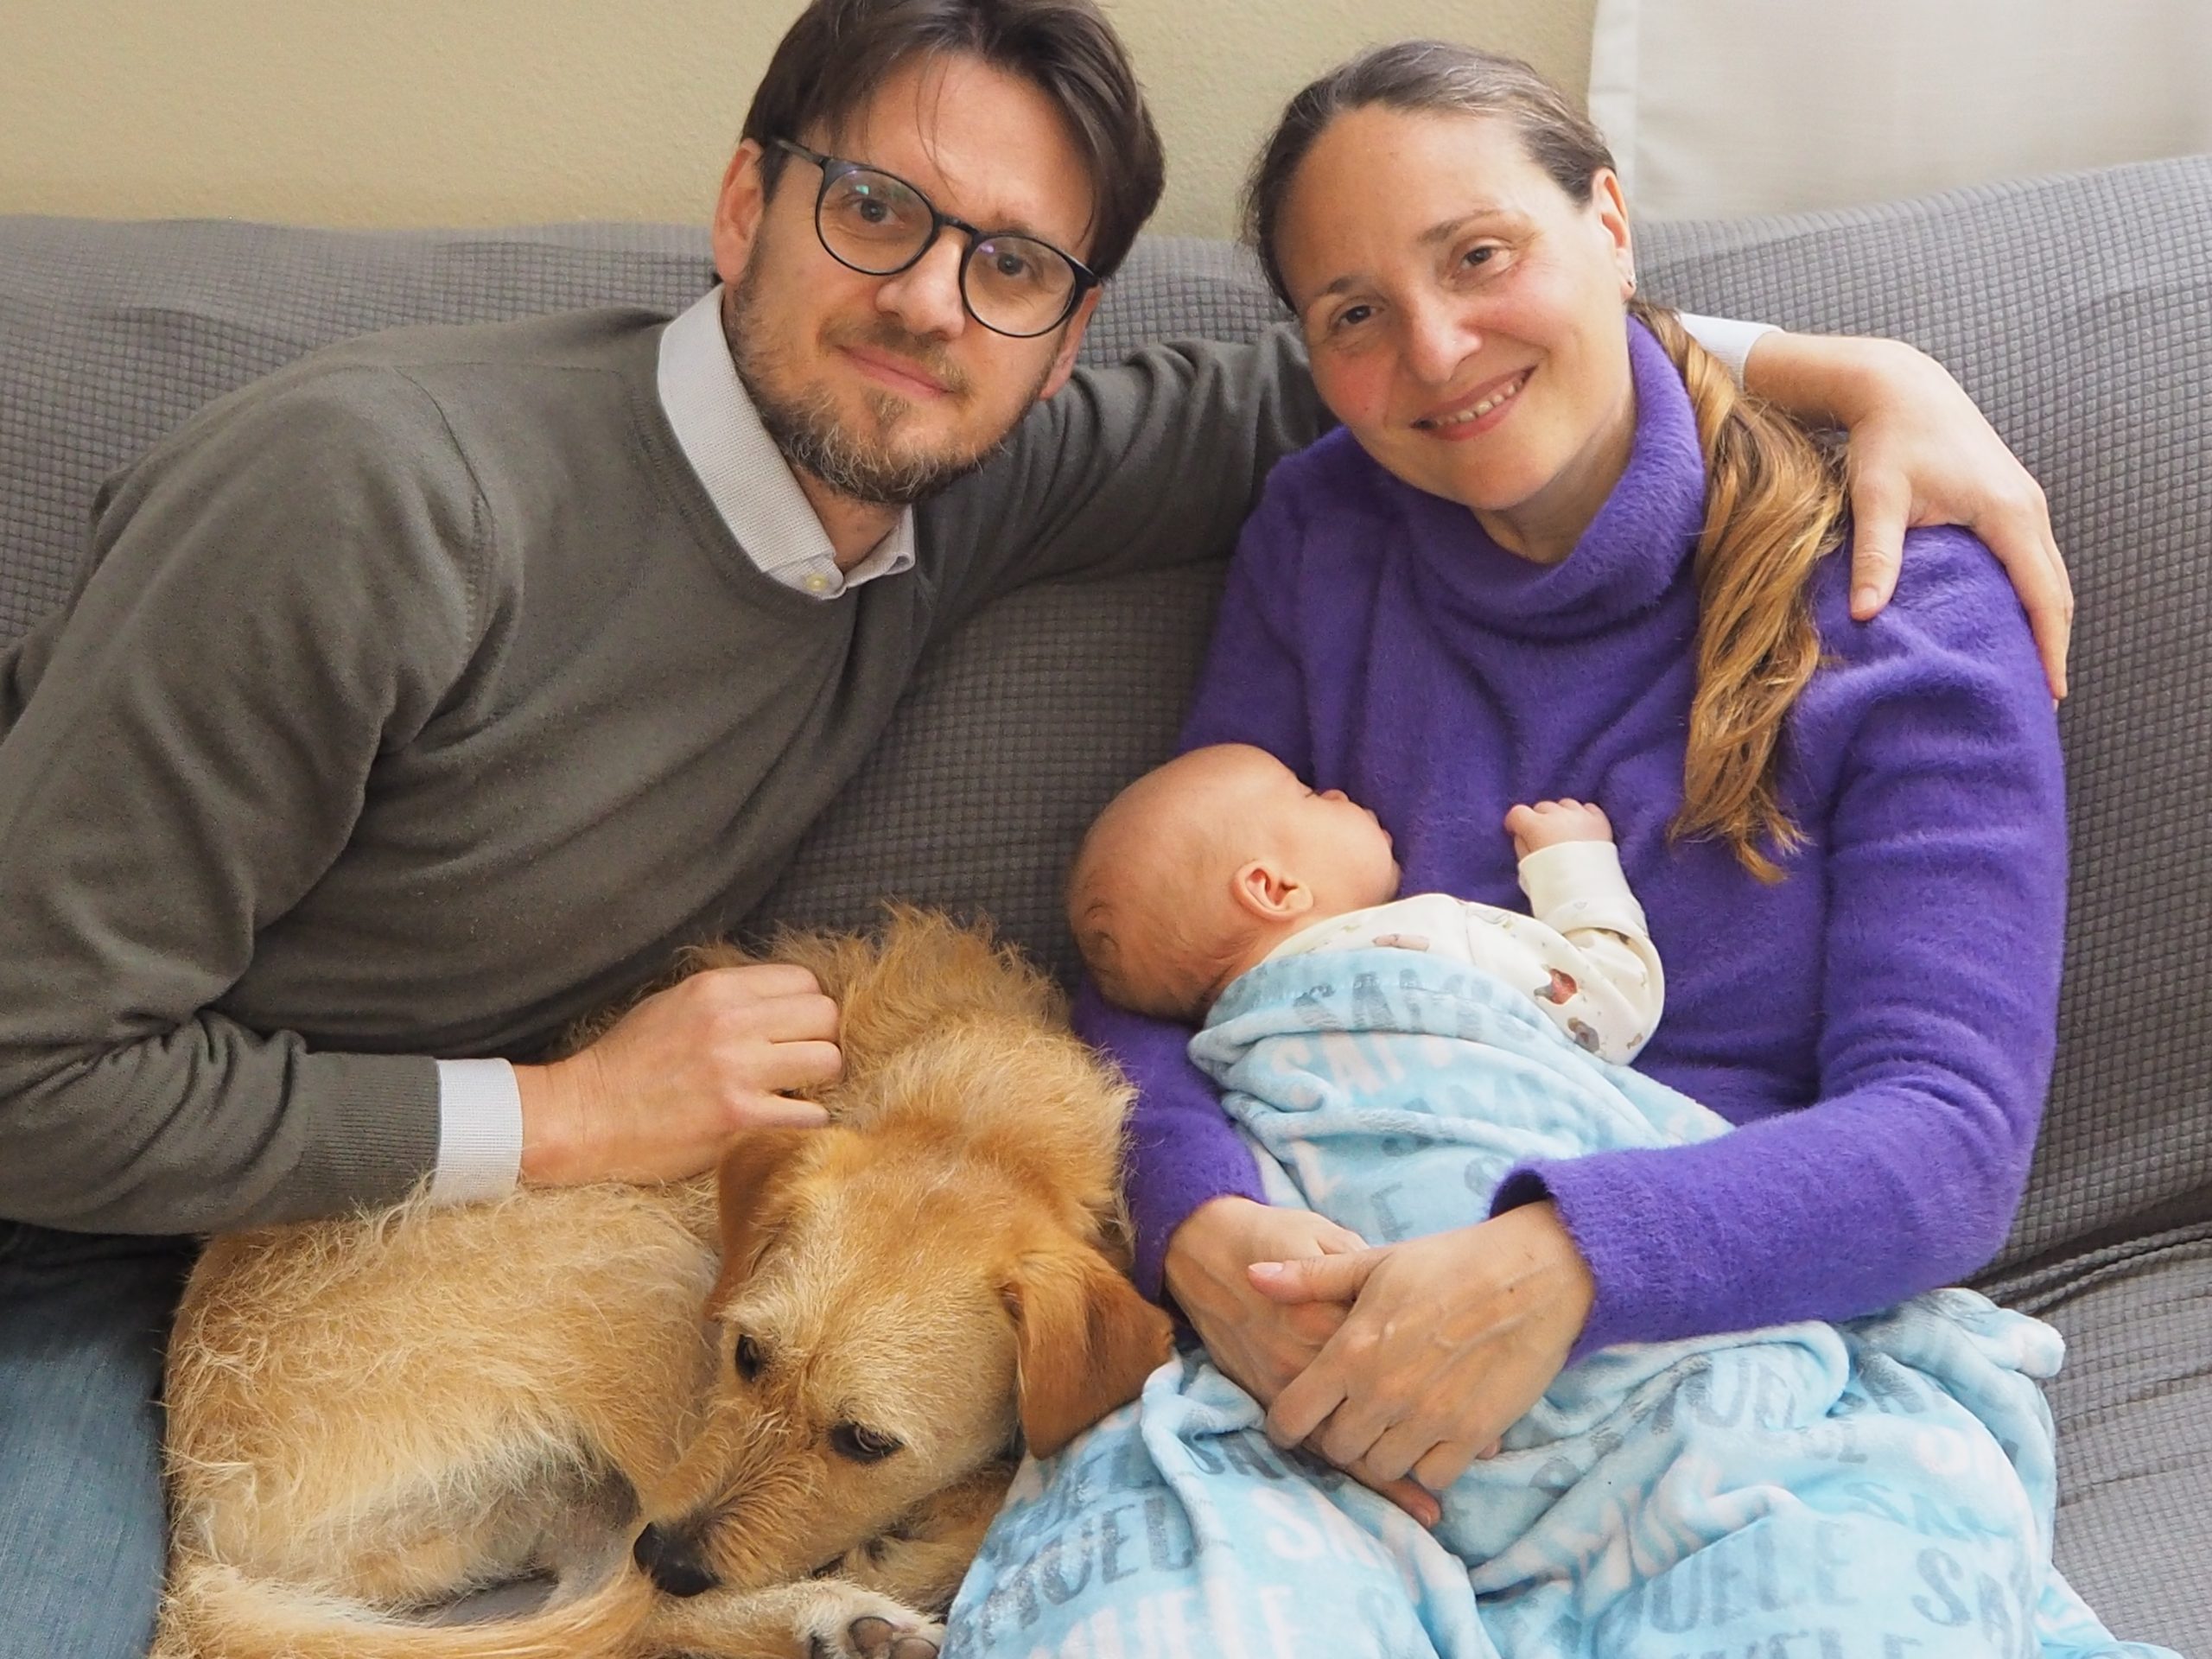 Ippoliti family welcomes son via embryo adoption